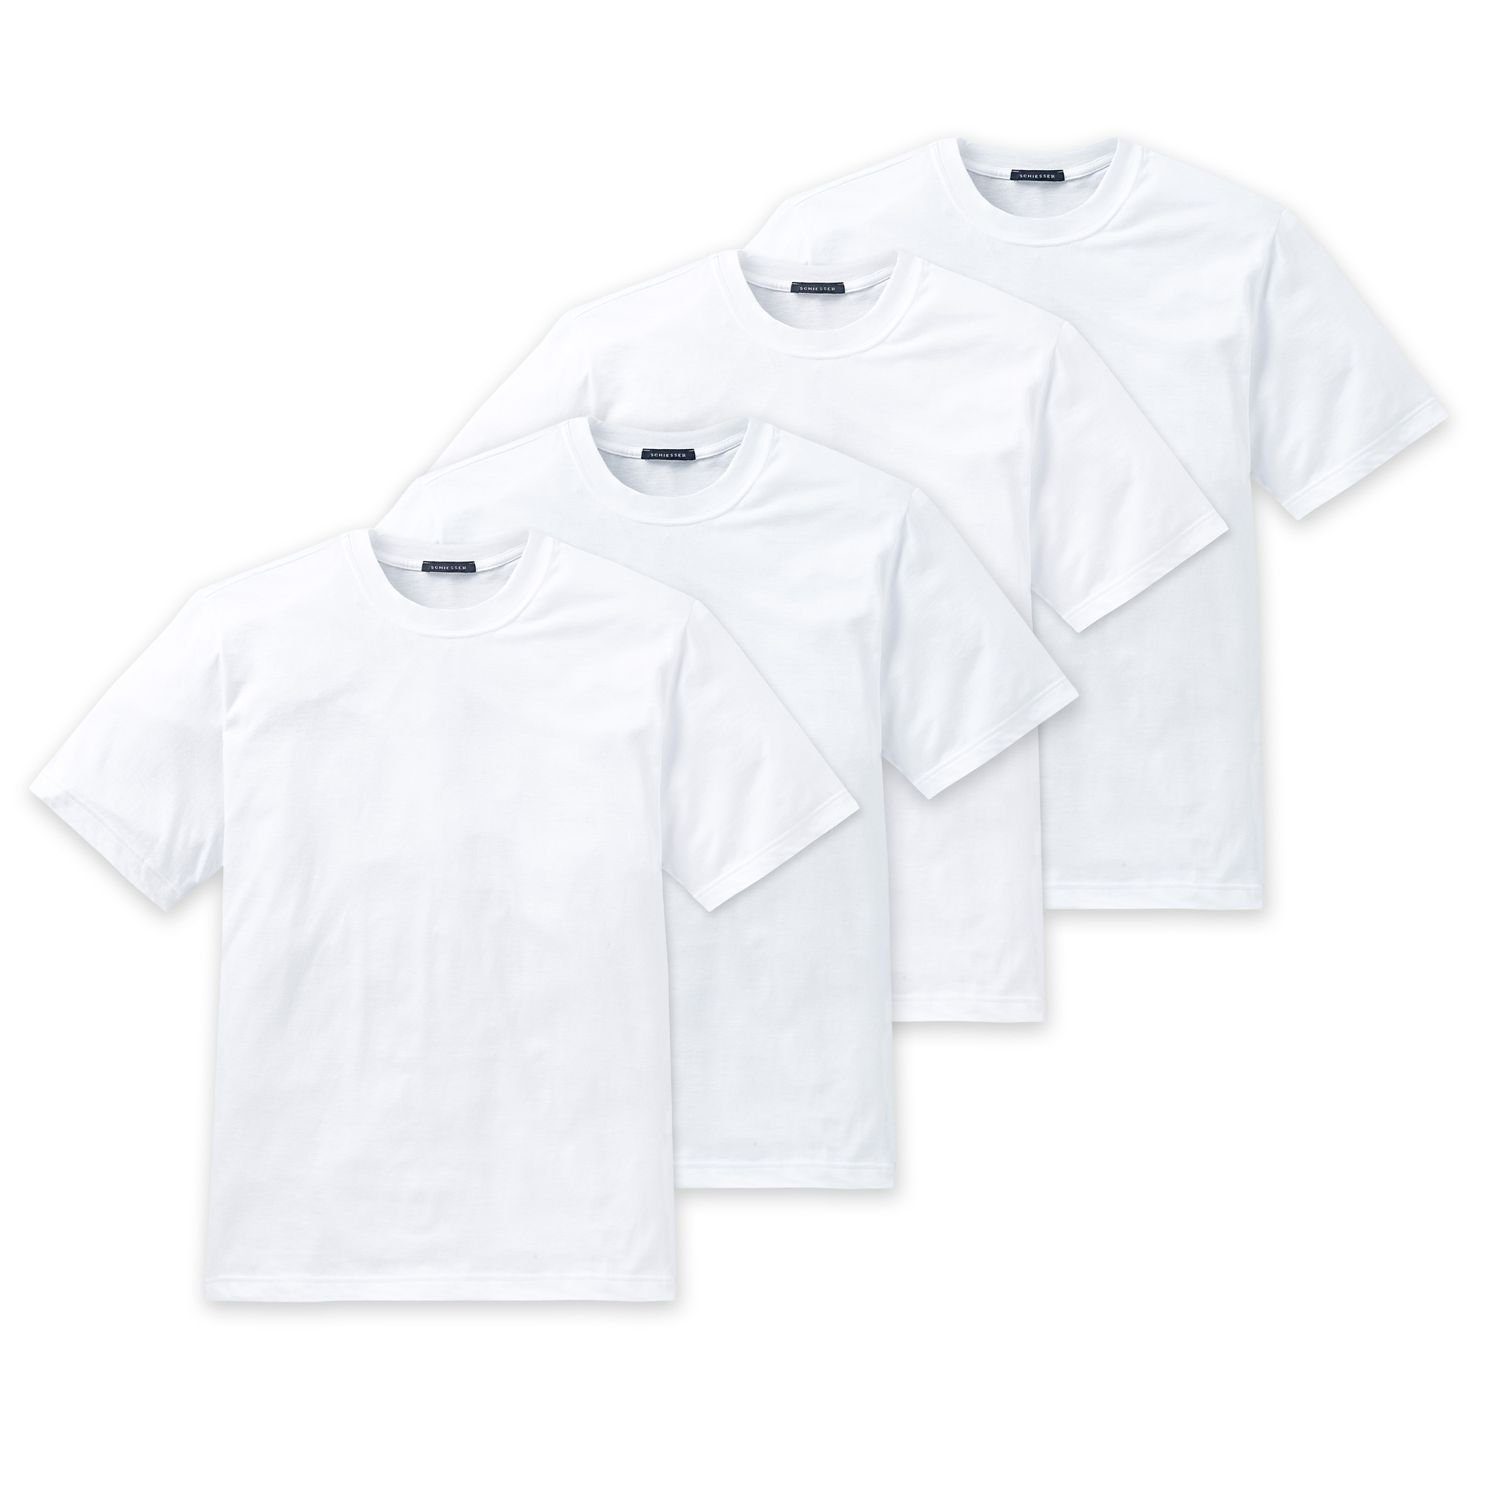 Rundhals-Ausschnitt Essentials 4 Weiss Schiesser x T-Shirt